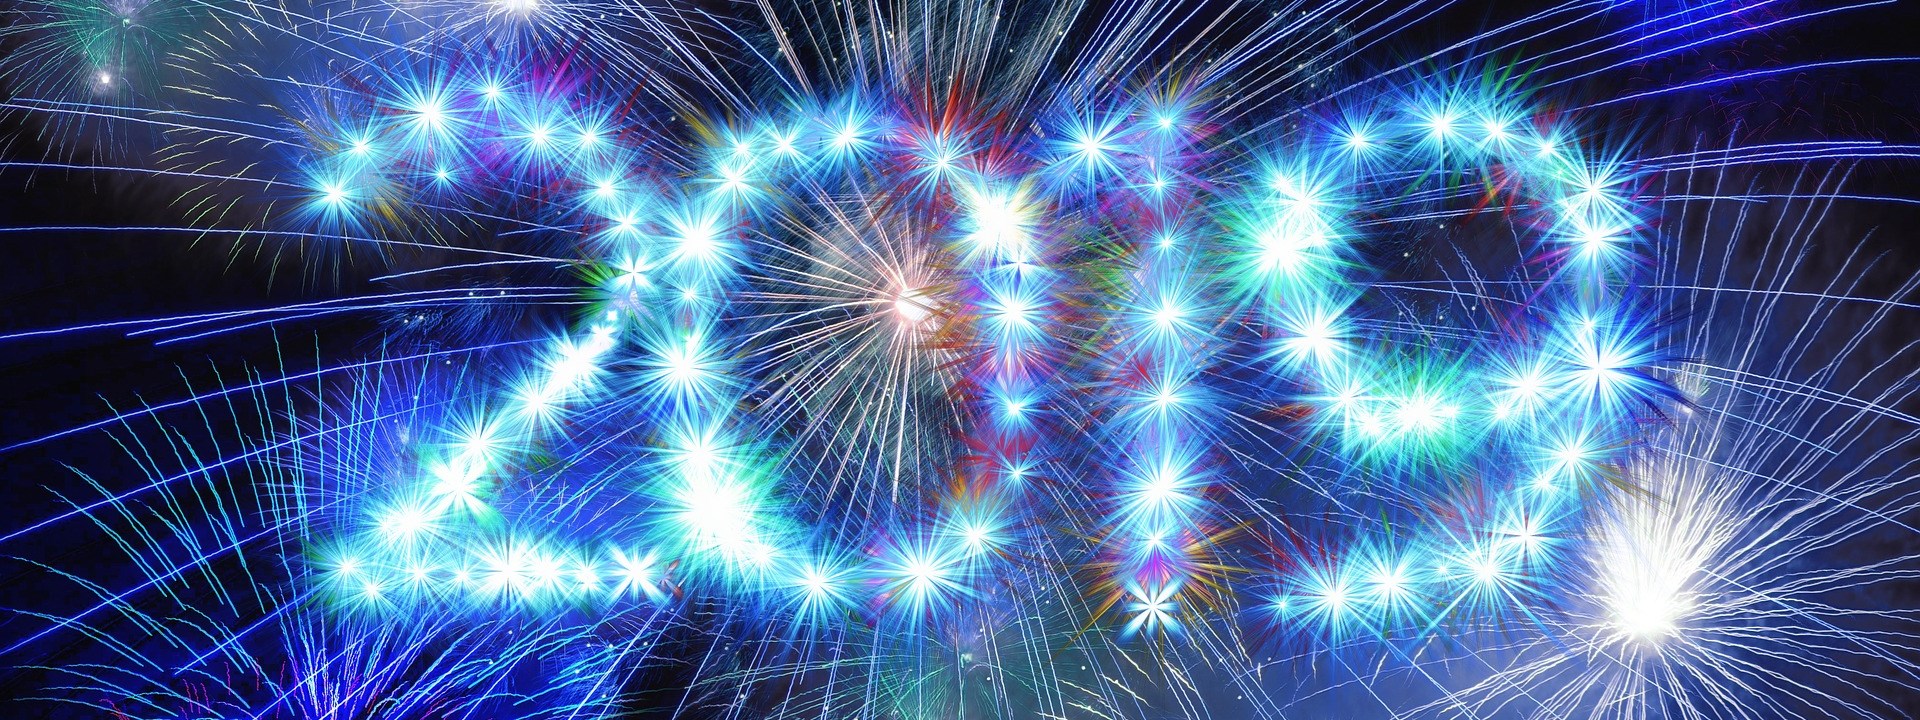 2019 Fireworks New Year